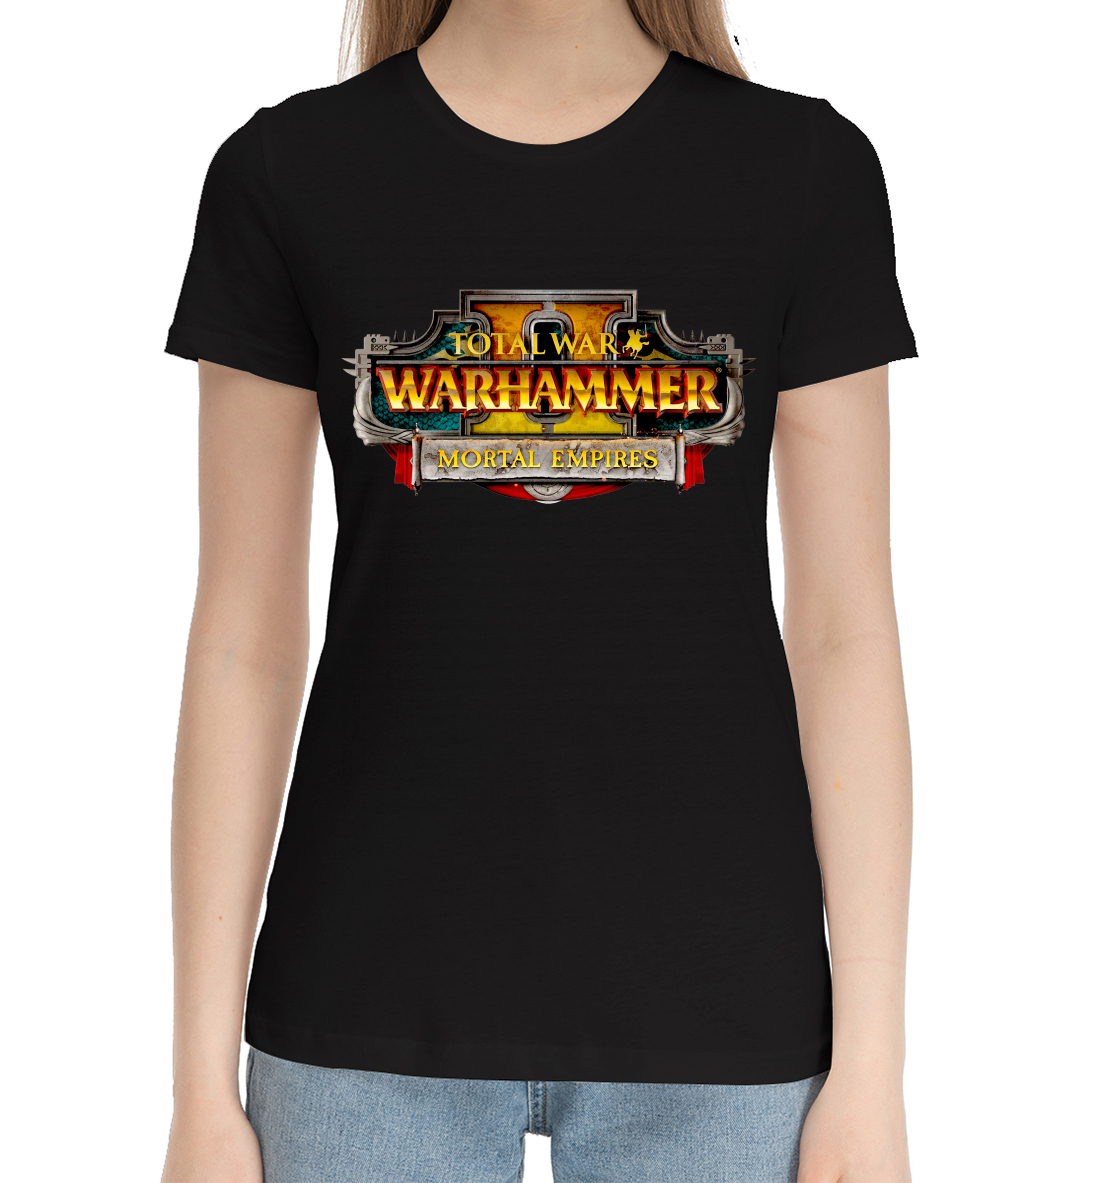 Женская Хлопковая футболка с принтом Warhammer, артикул WHR-924220-hfu-1mp